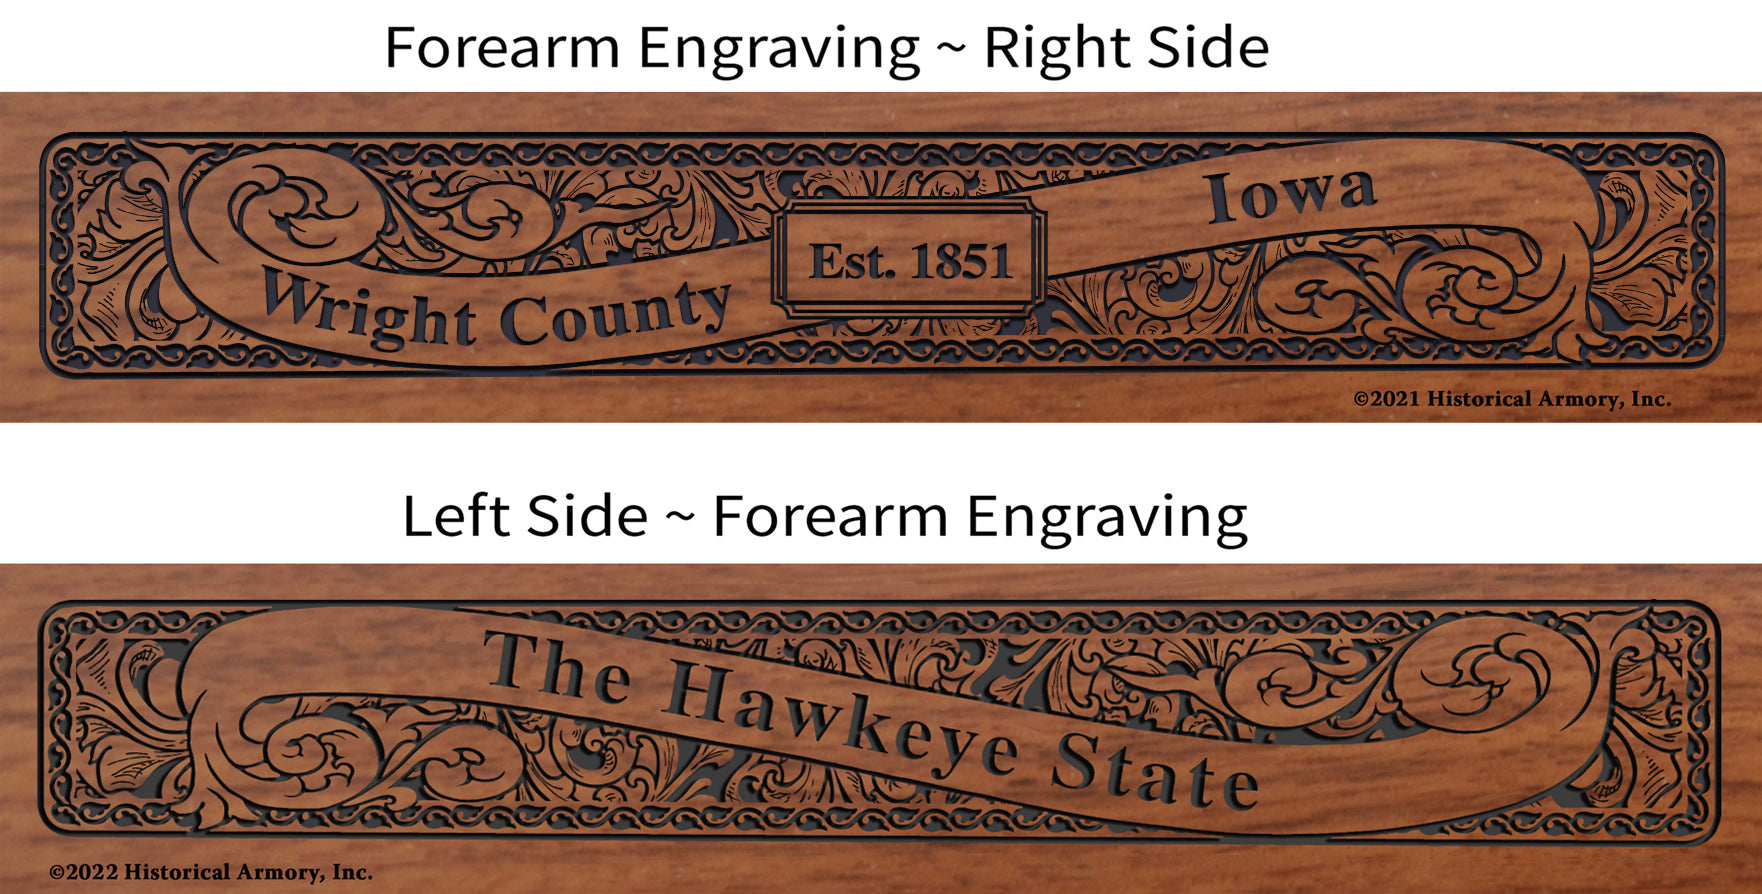 Wright County Iowa Engraved Rifle Forearm